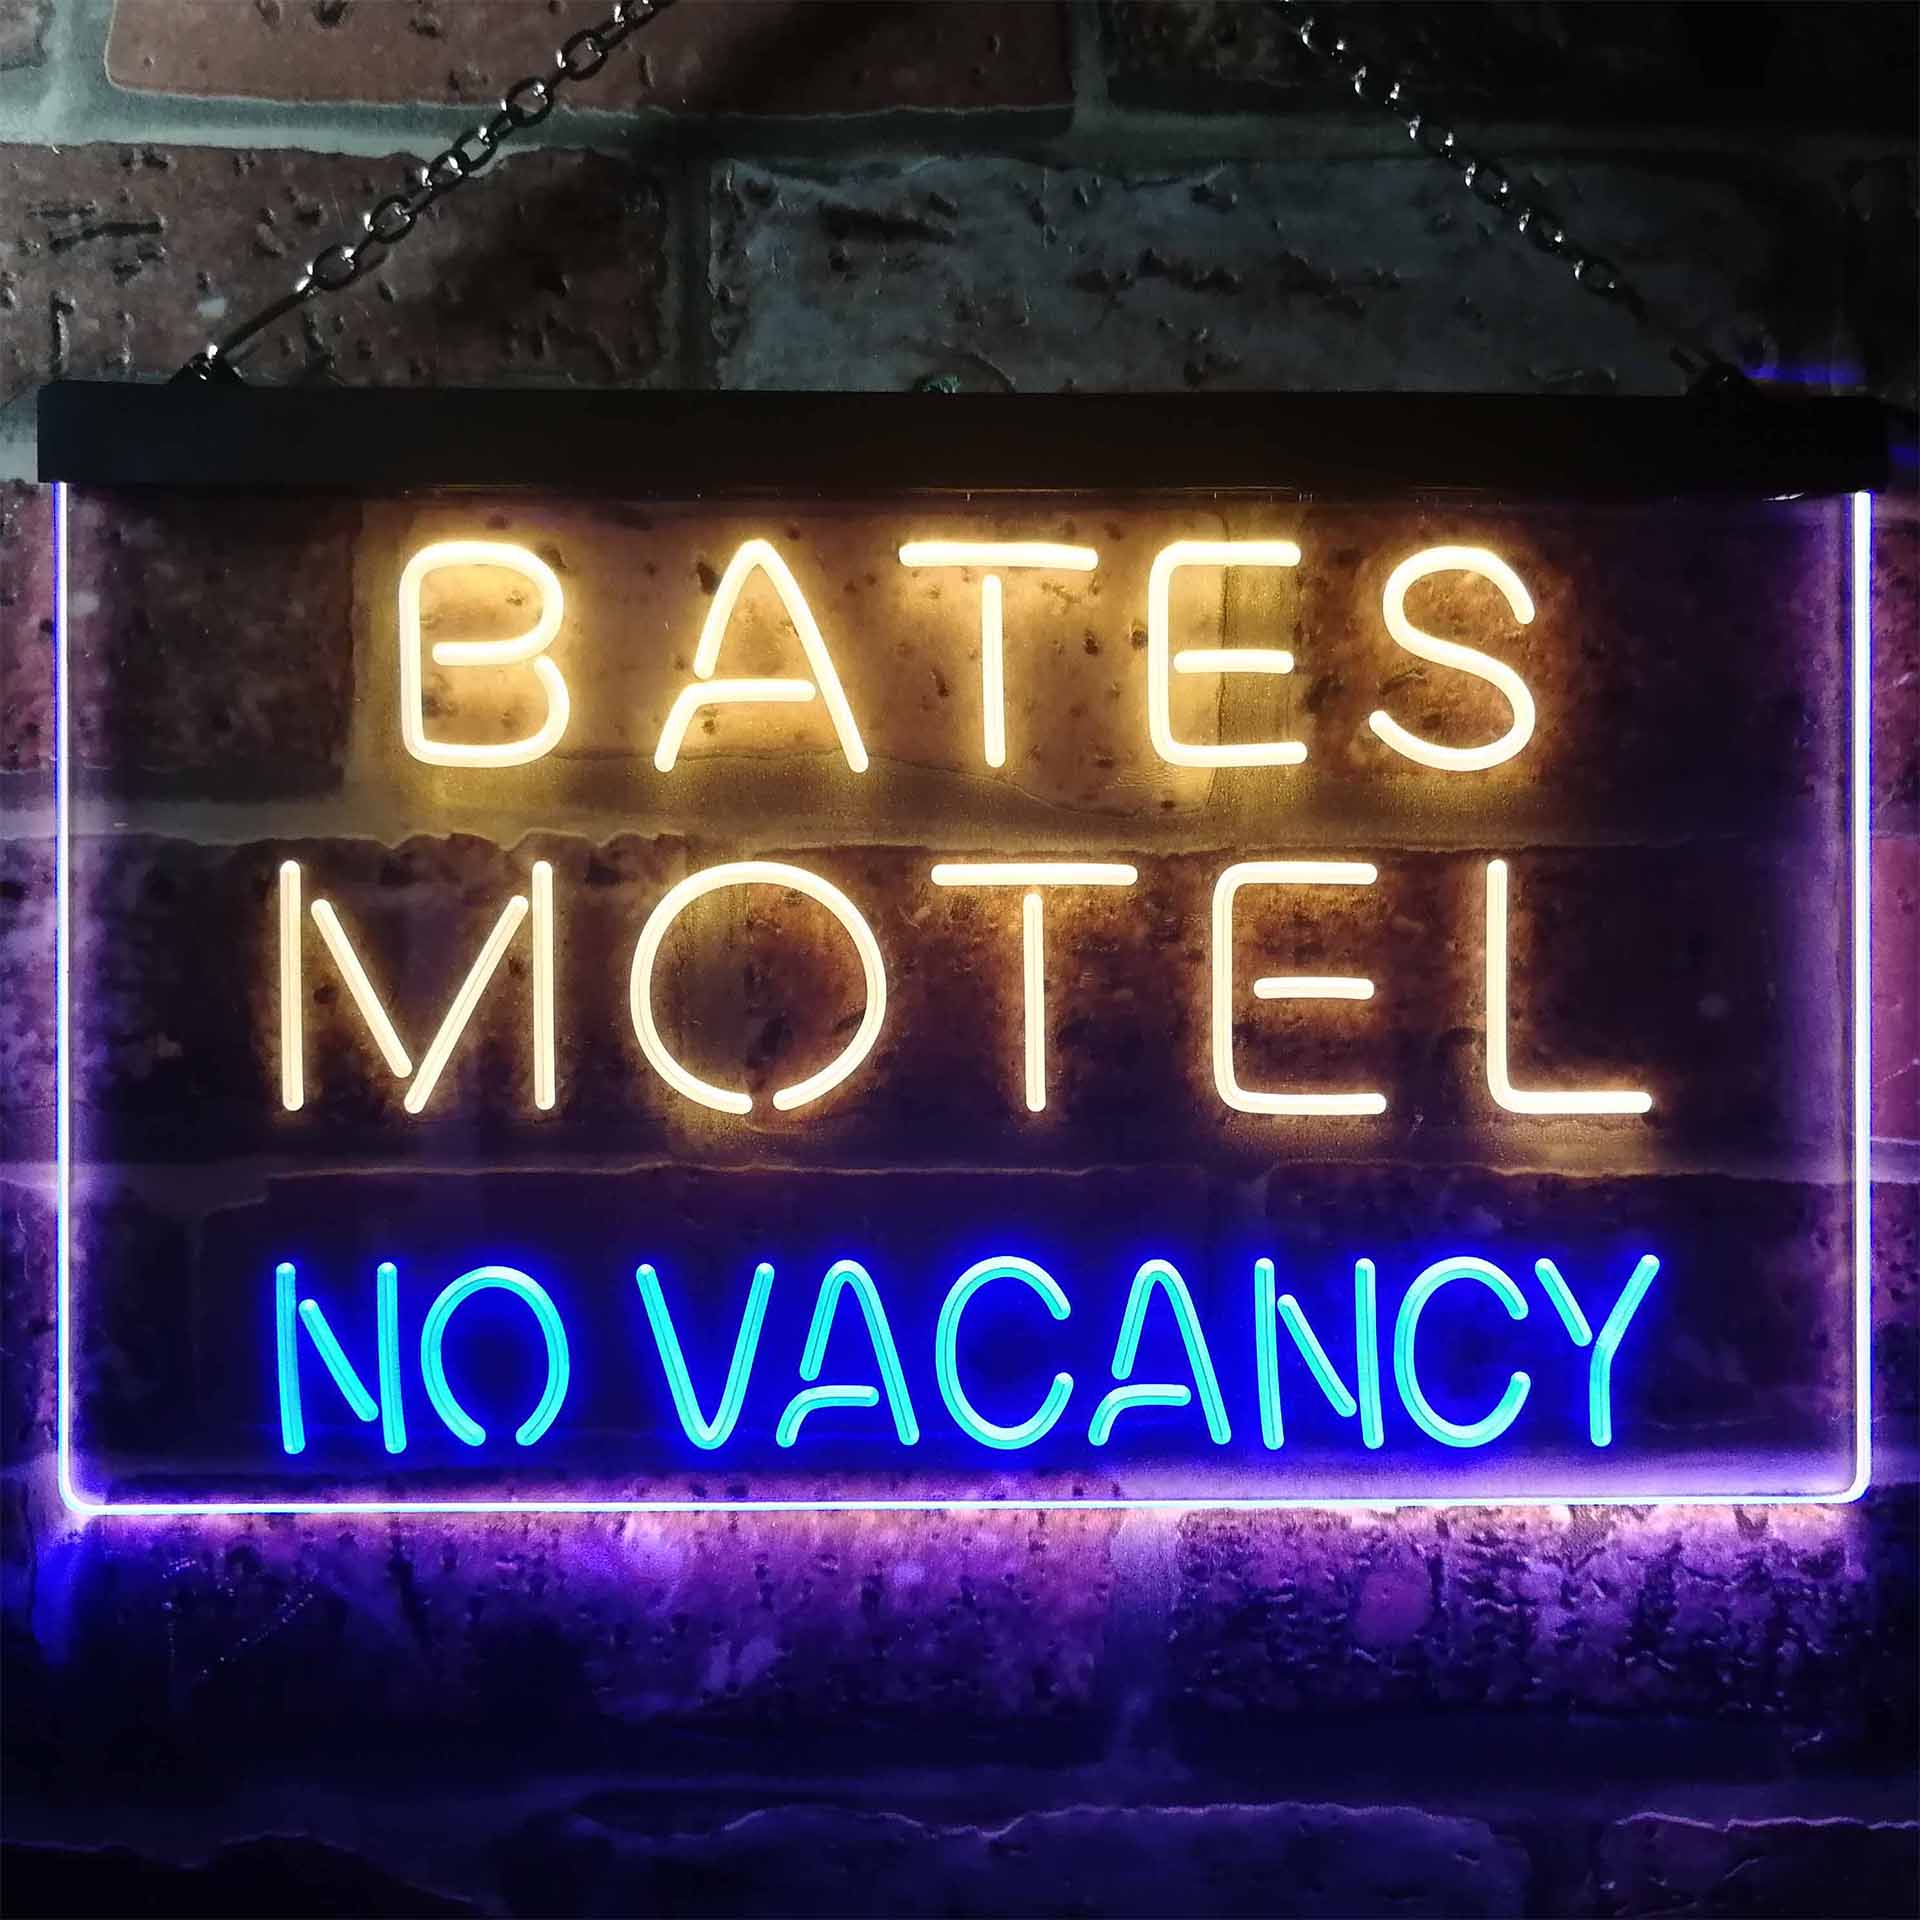 Bates Motel No Vacancy Neon LED Sign - Halloween Christmas Decor